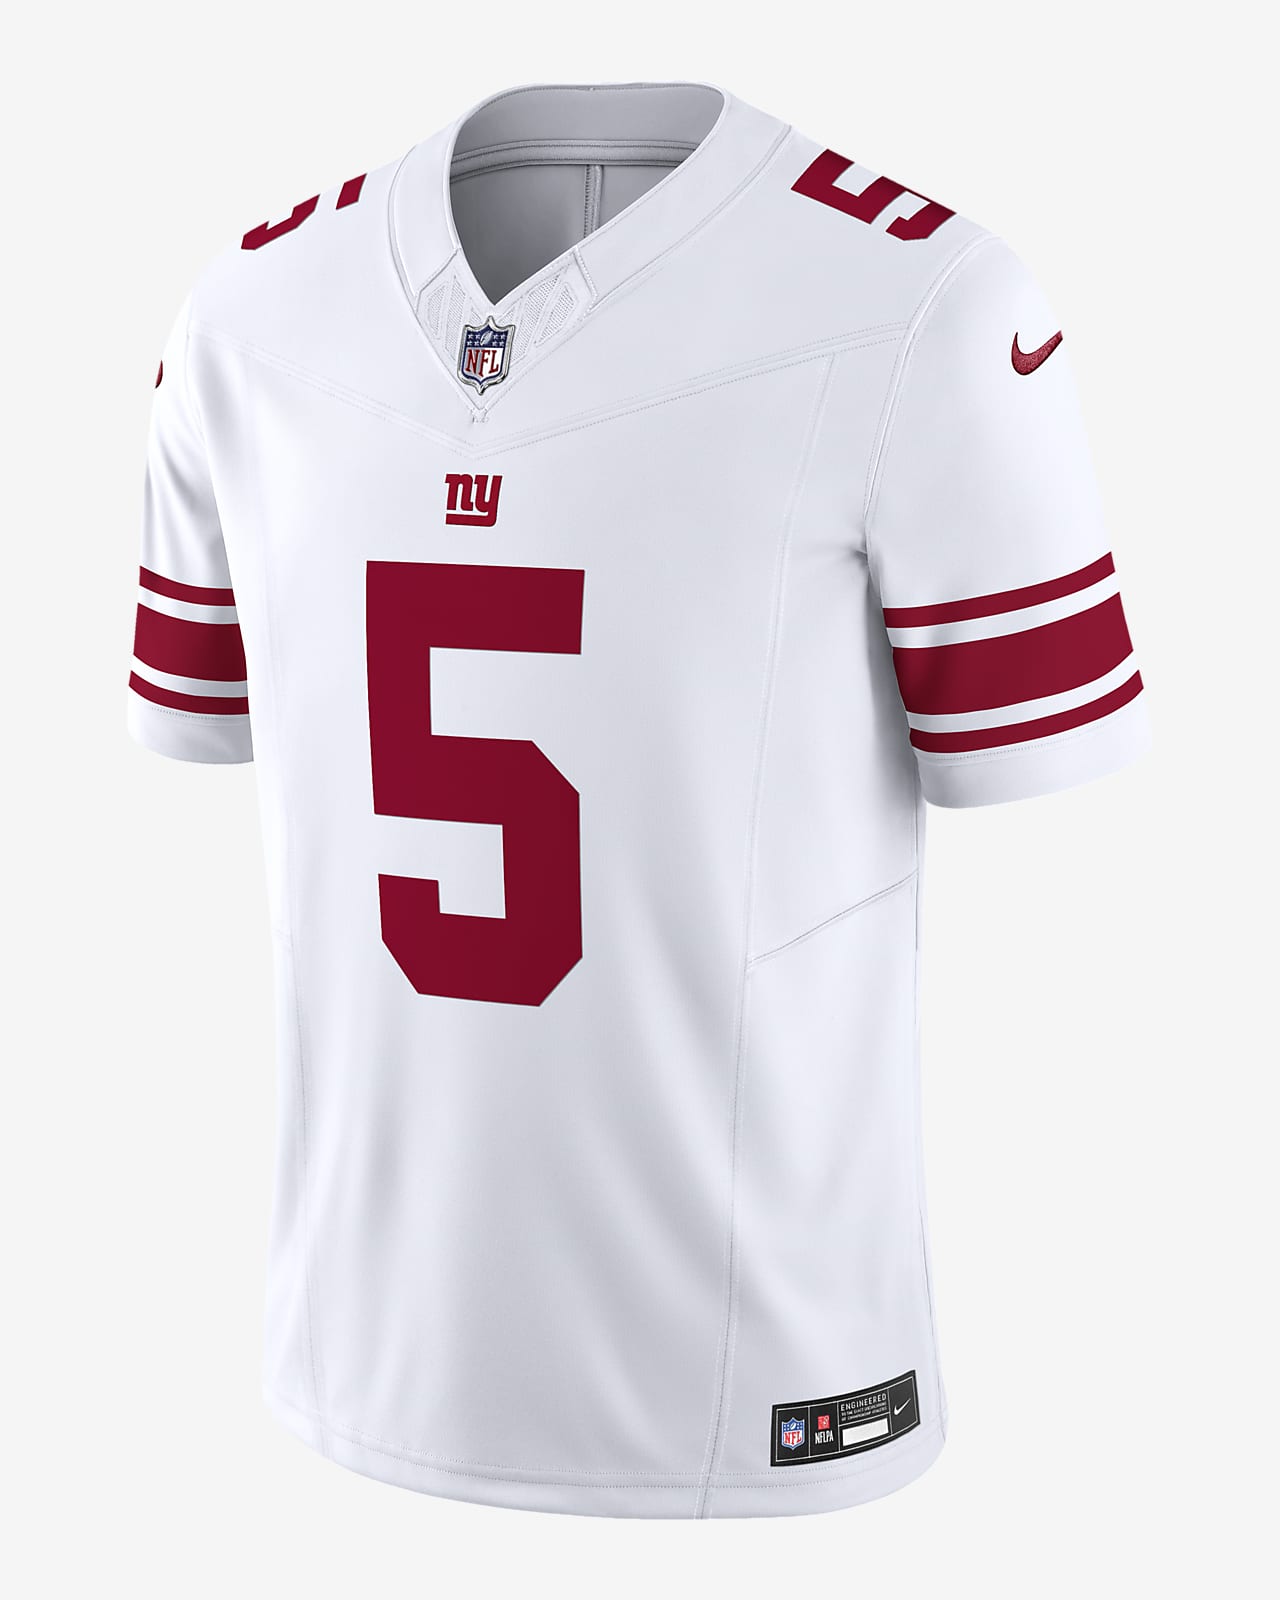 Kayvon Thibodeaux New York Giants Men's Nike Dri-FIT NFL Limited Football  Jersey.